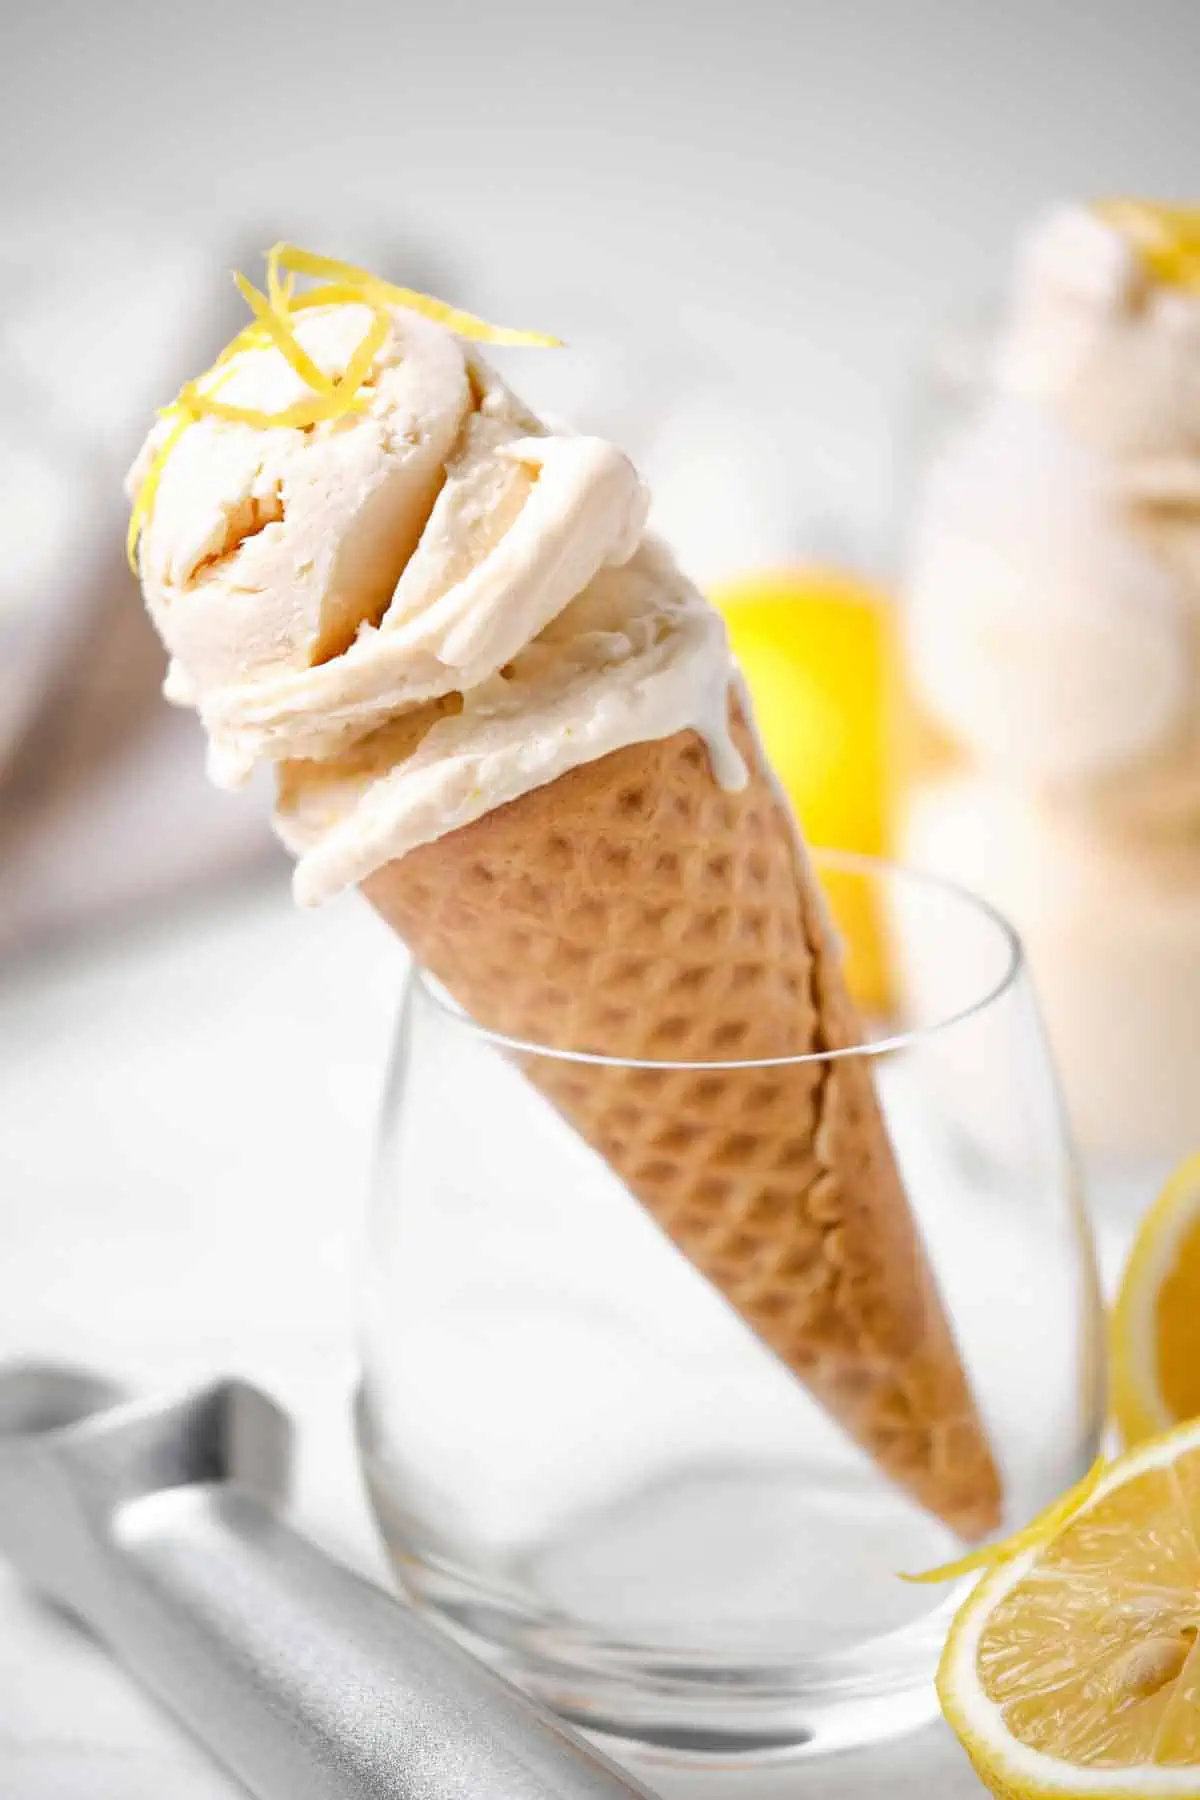 A clear glass holding an ice cream cone of lemon ice cream.